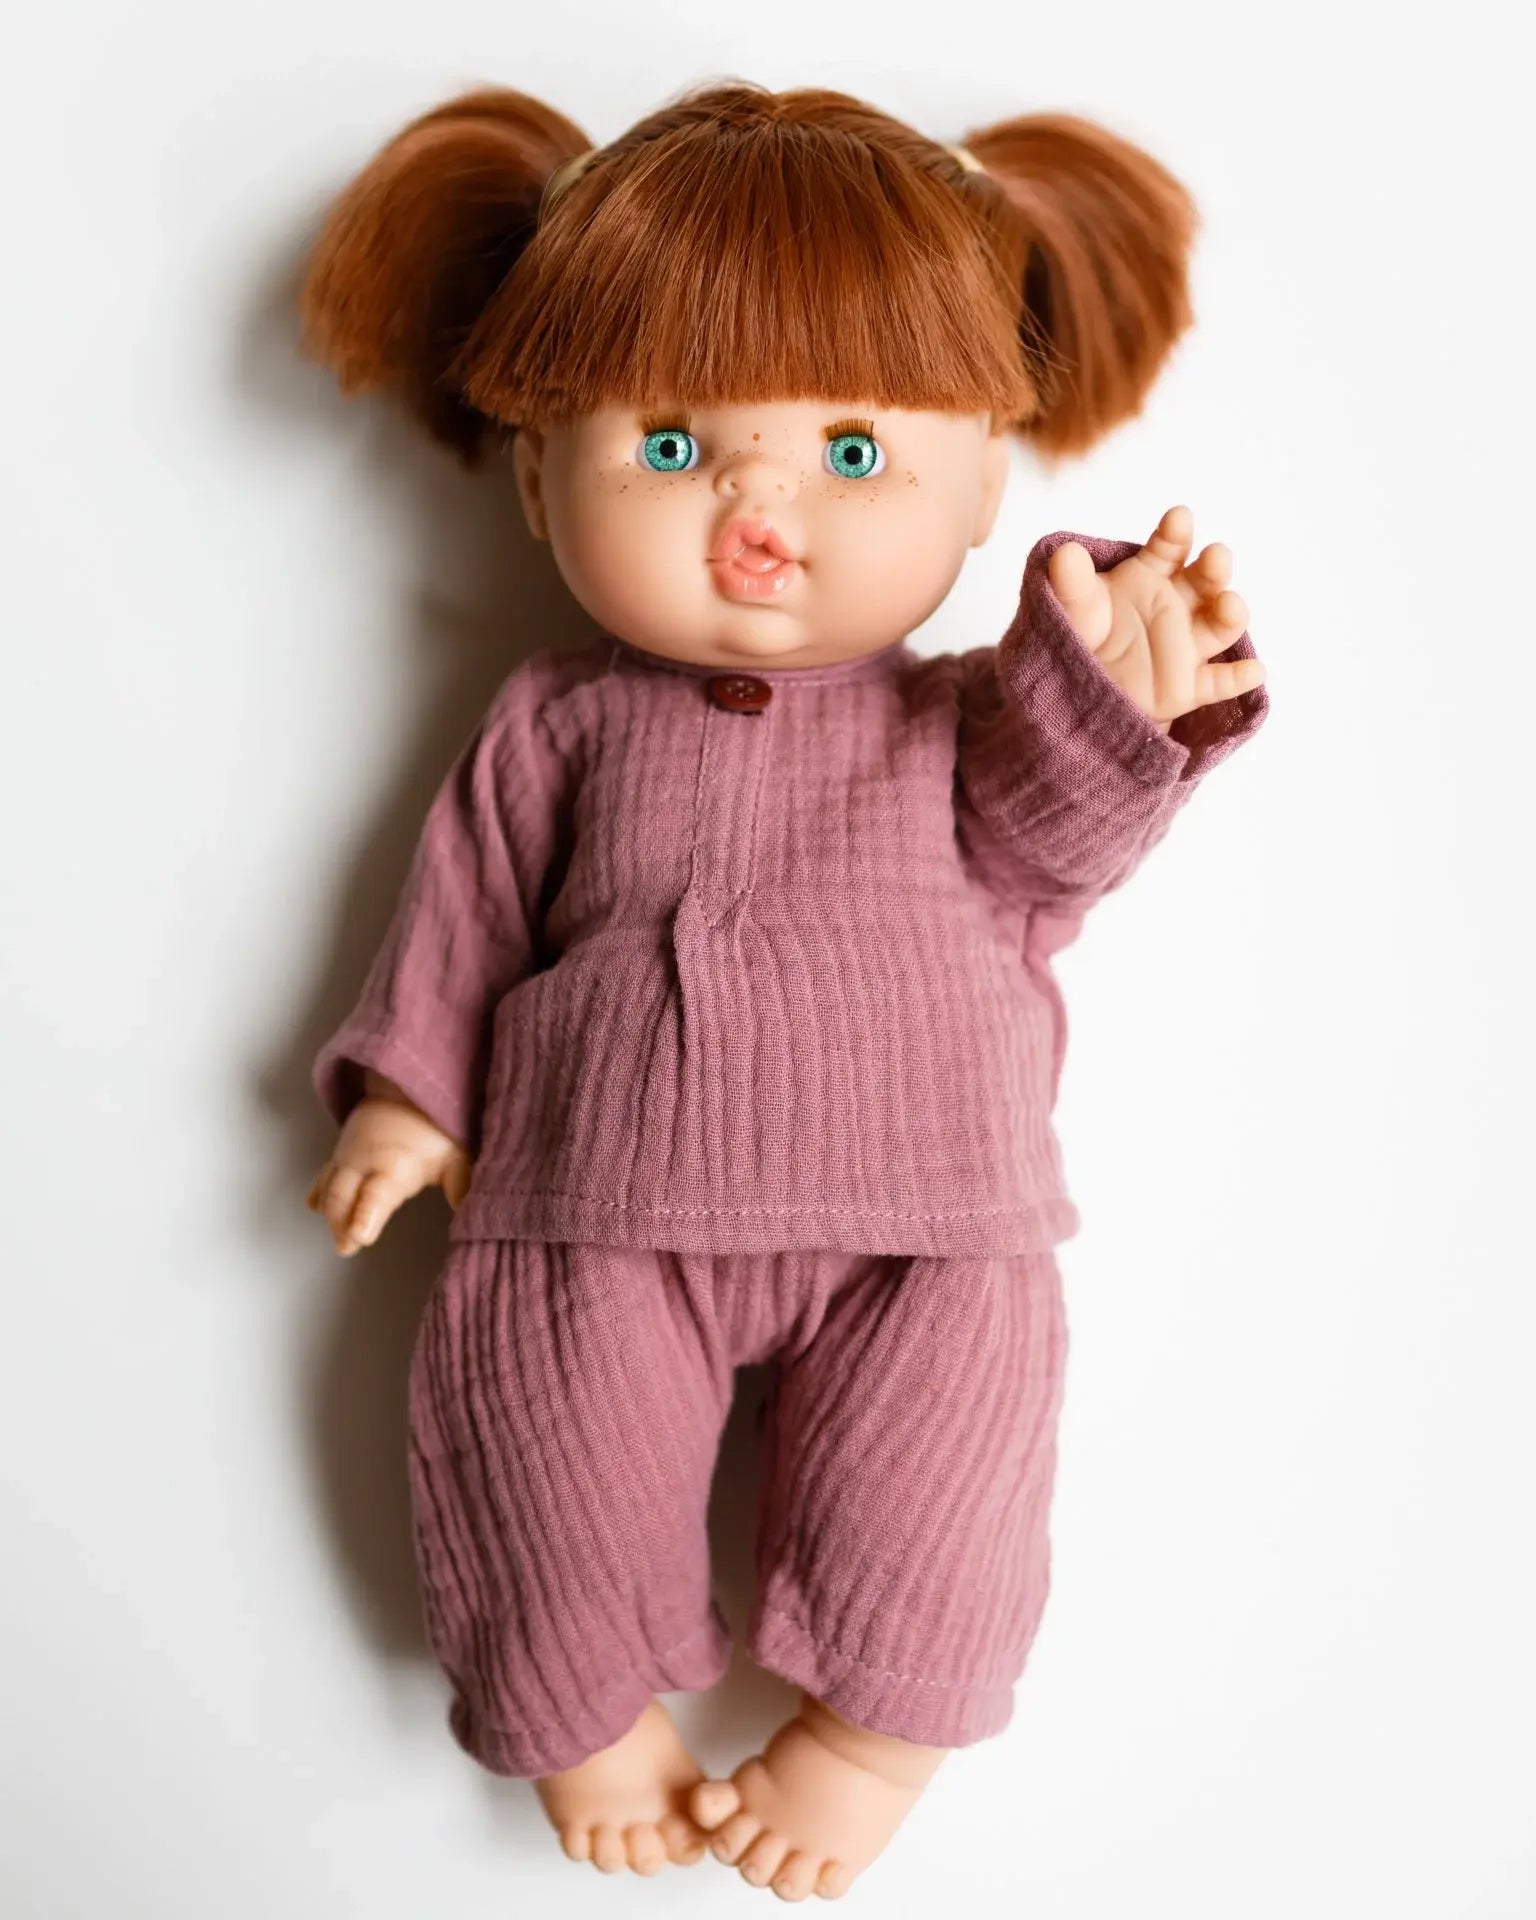 Gabrielle European Girl Baby Doll with Green Eyes  Minikane   